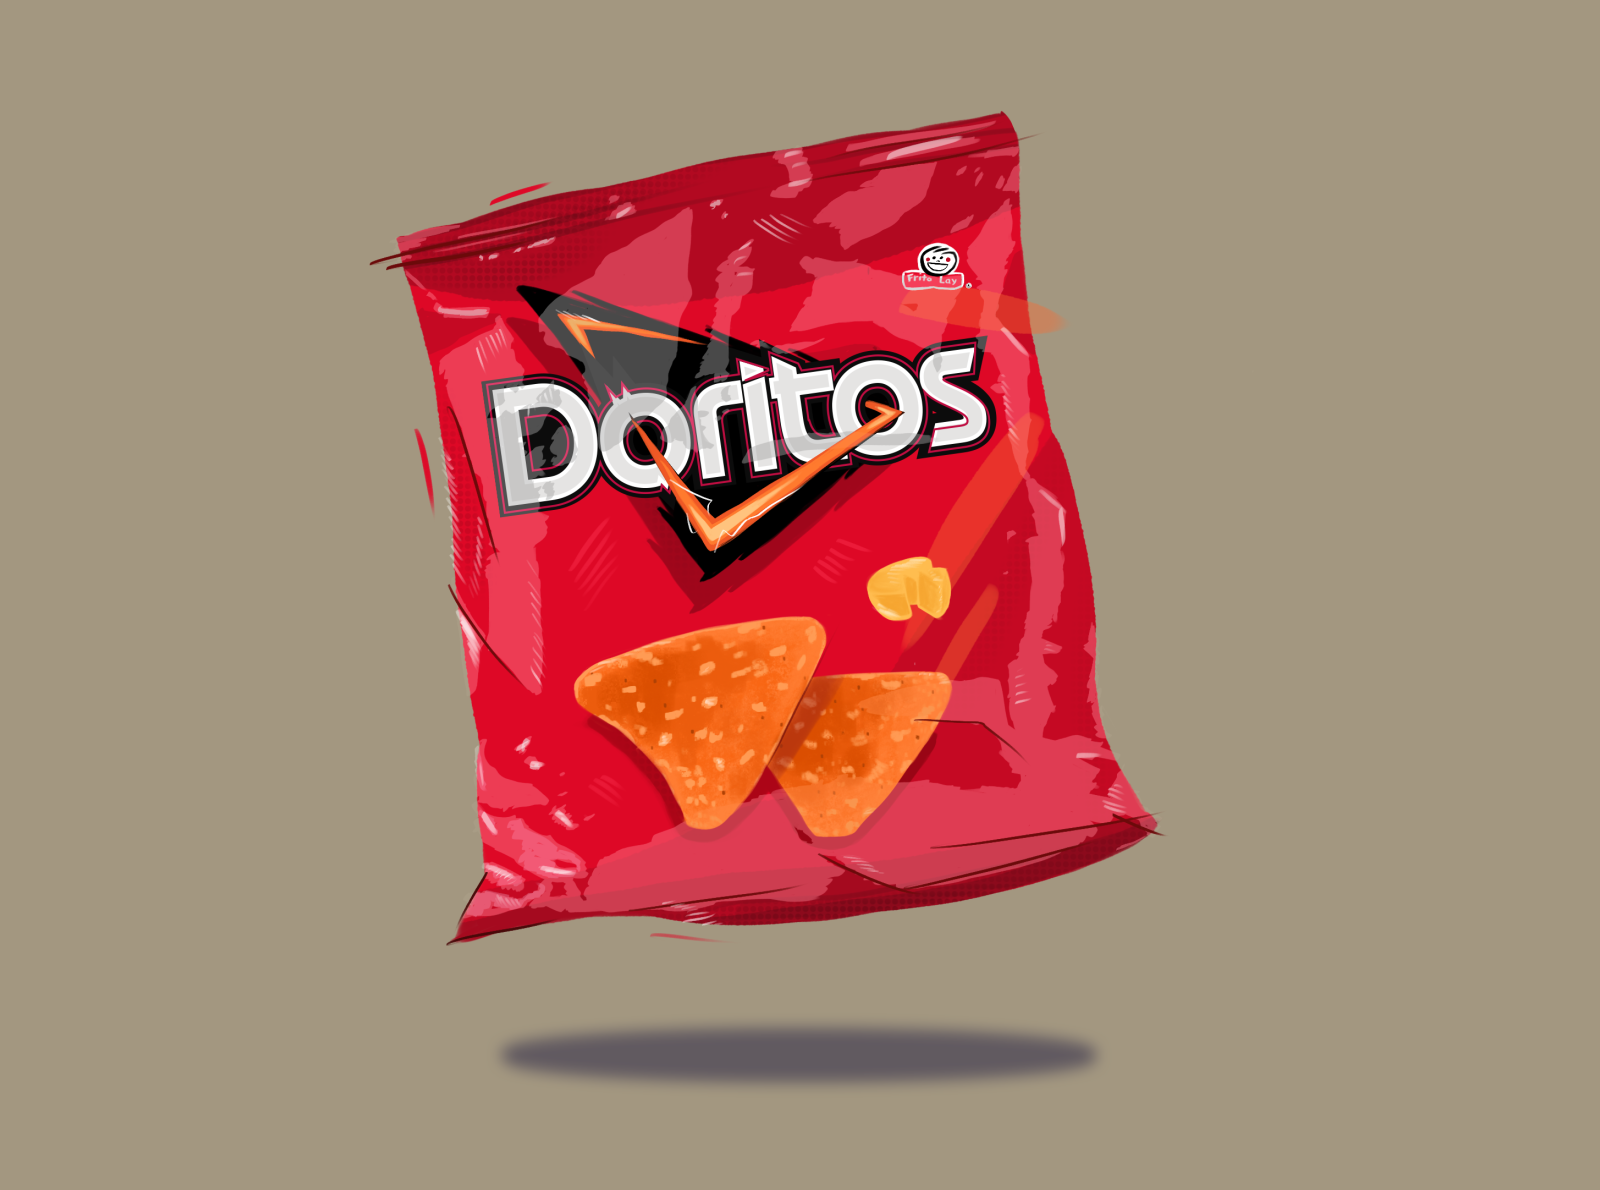 Doritos Snack Bag by v on Dribbble